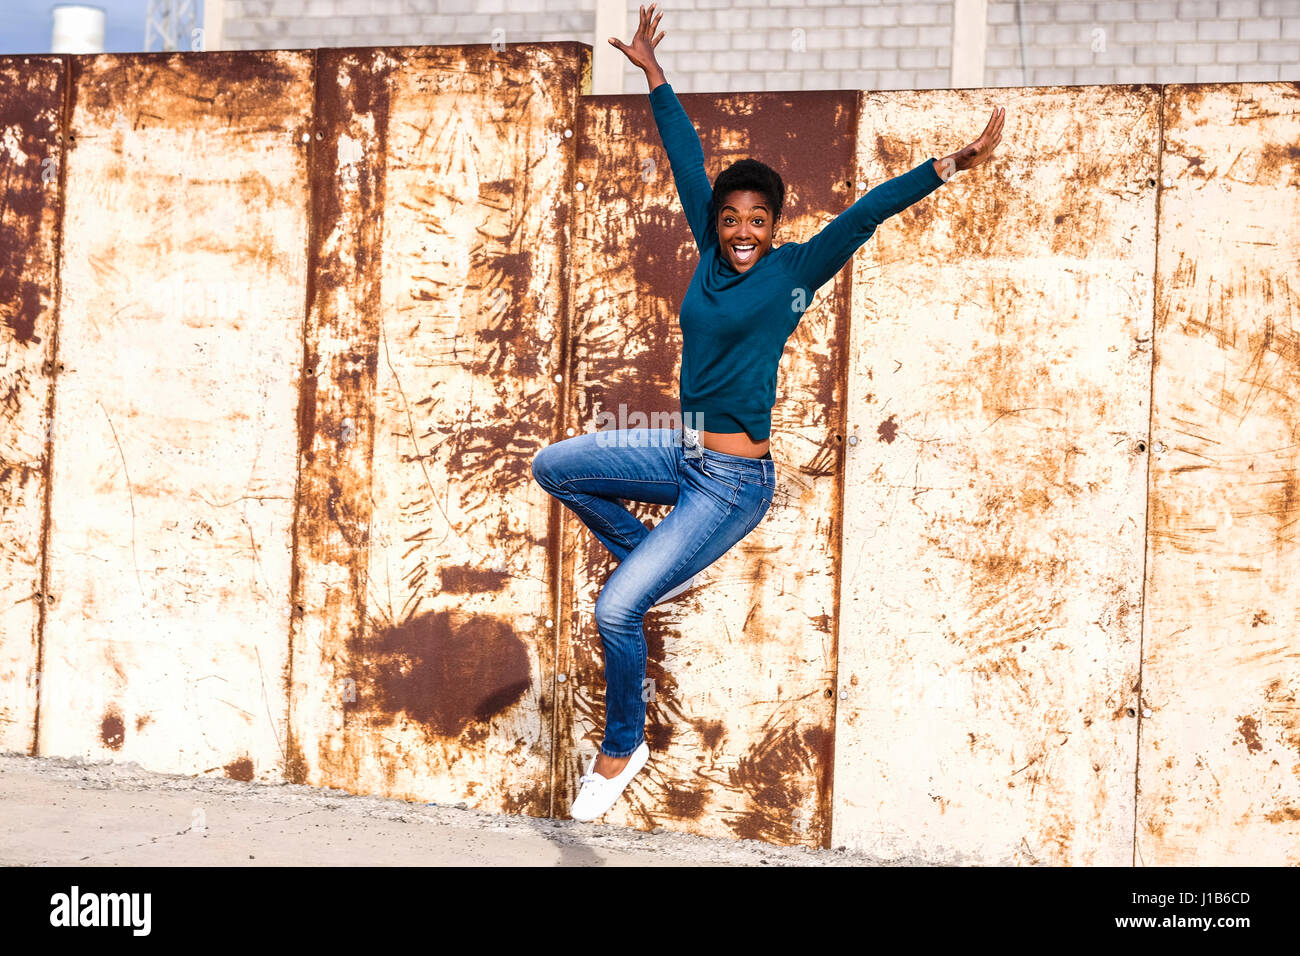 African American woman jumping for joy near rusty metal wall Stock Photo